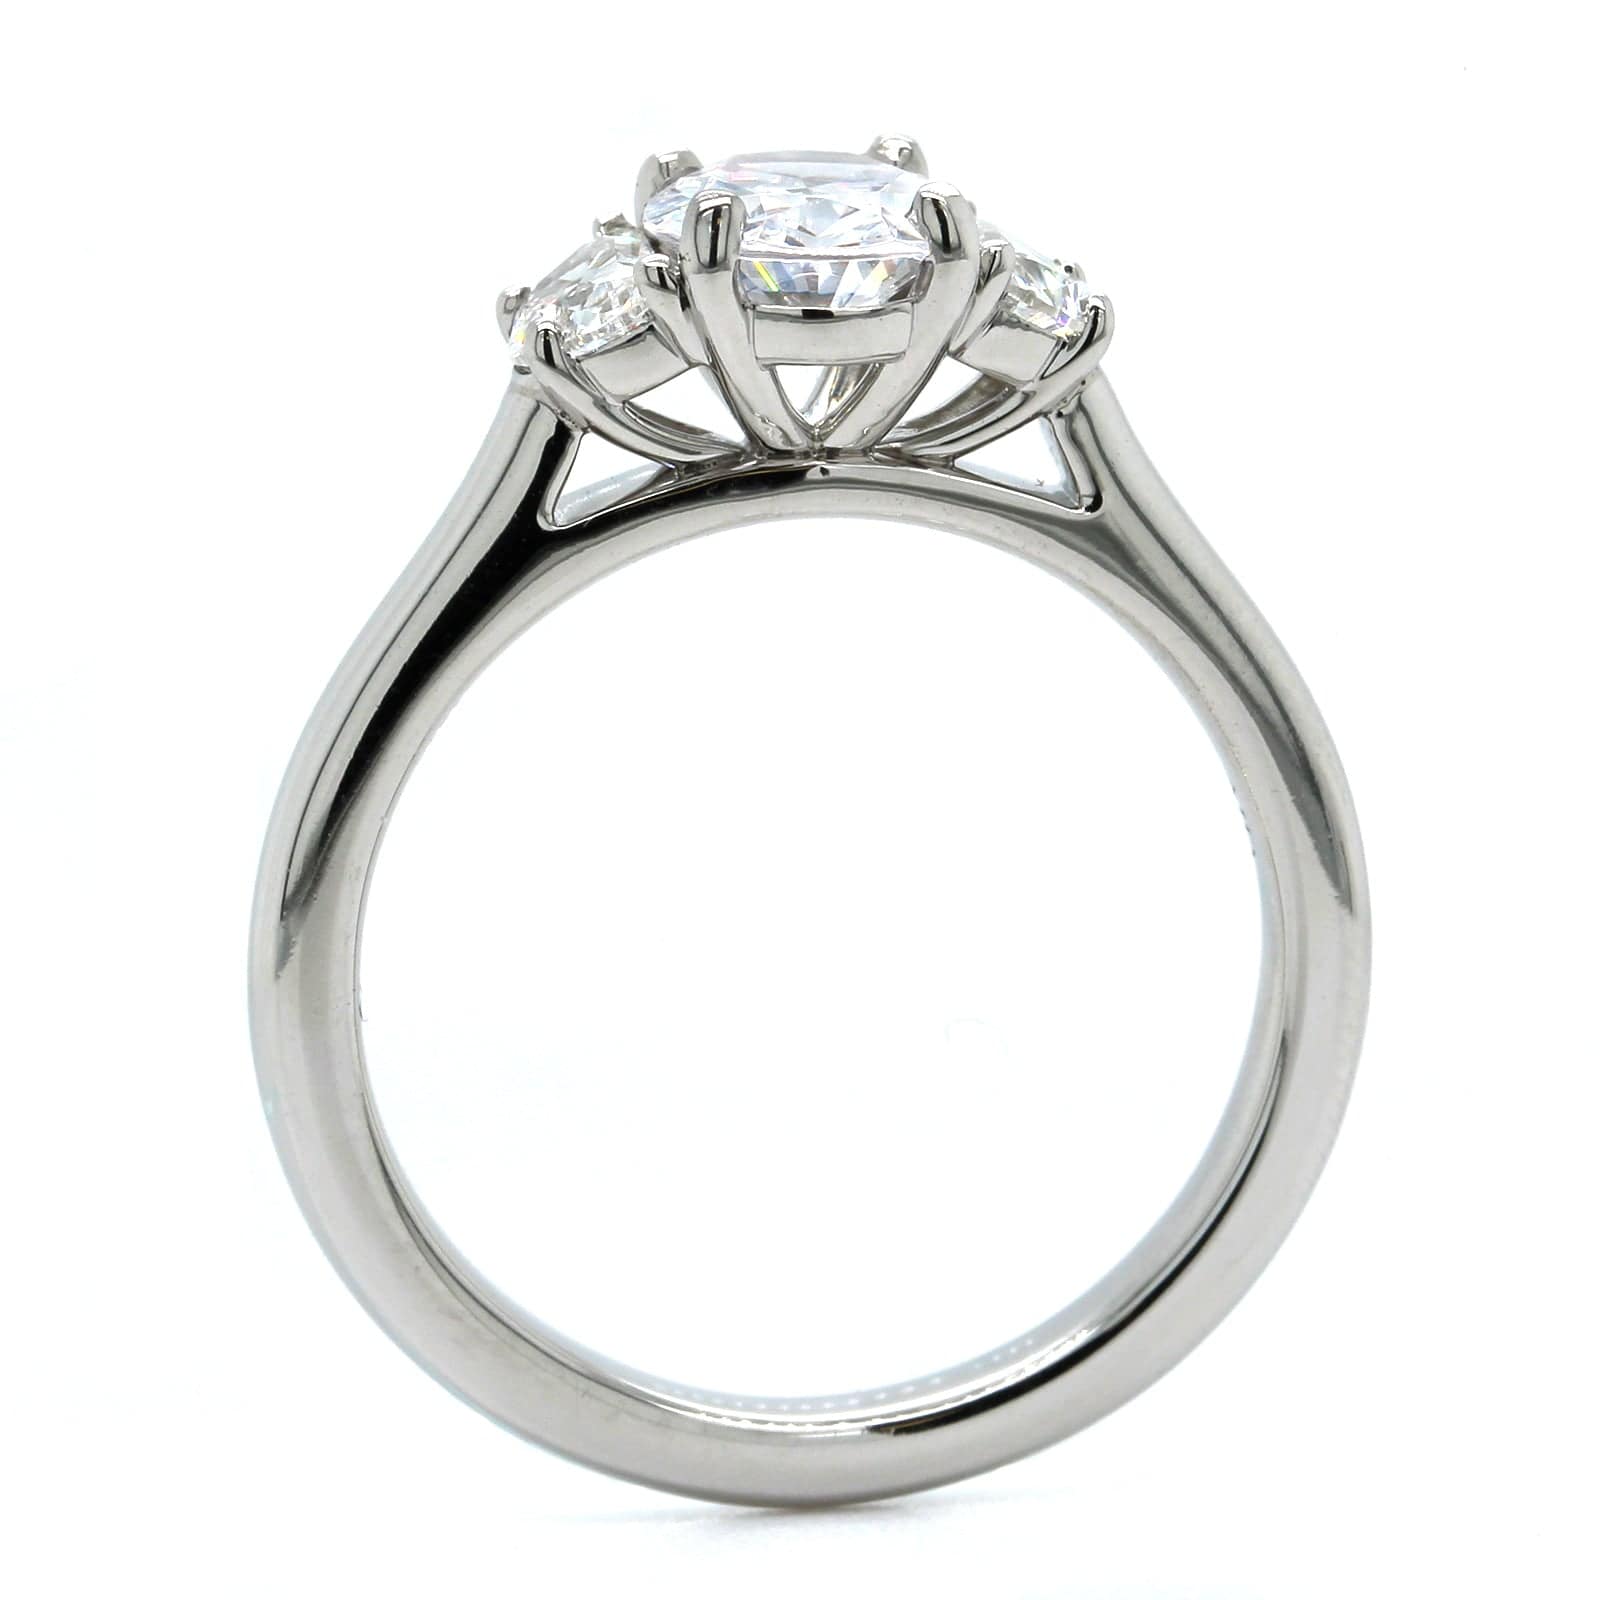 Platinum 3 Stone Oval Center Diamond Engagement Ring Setting